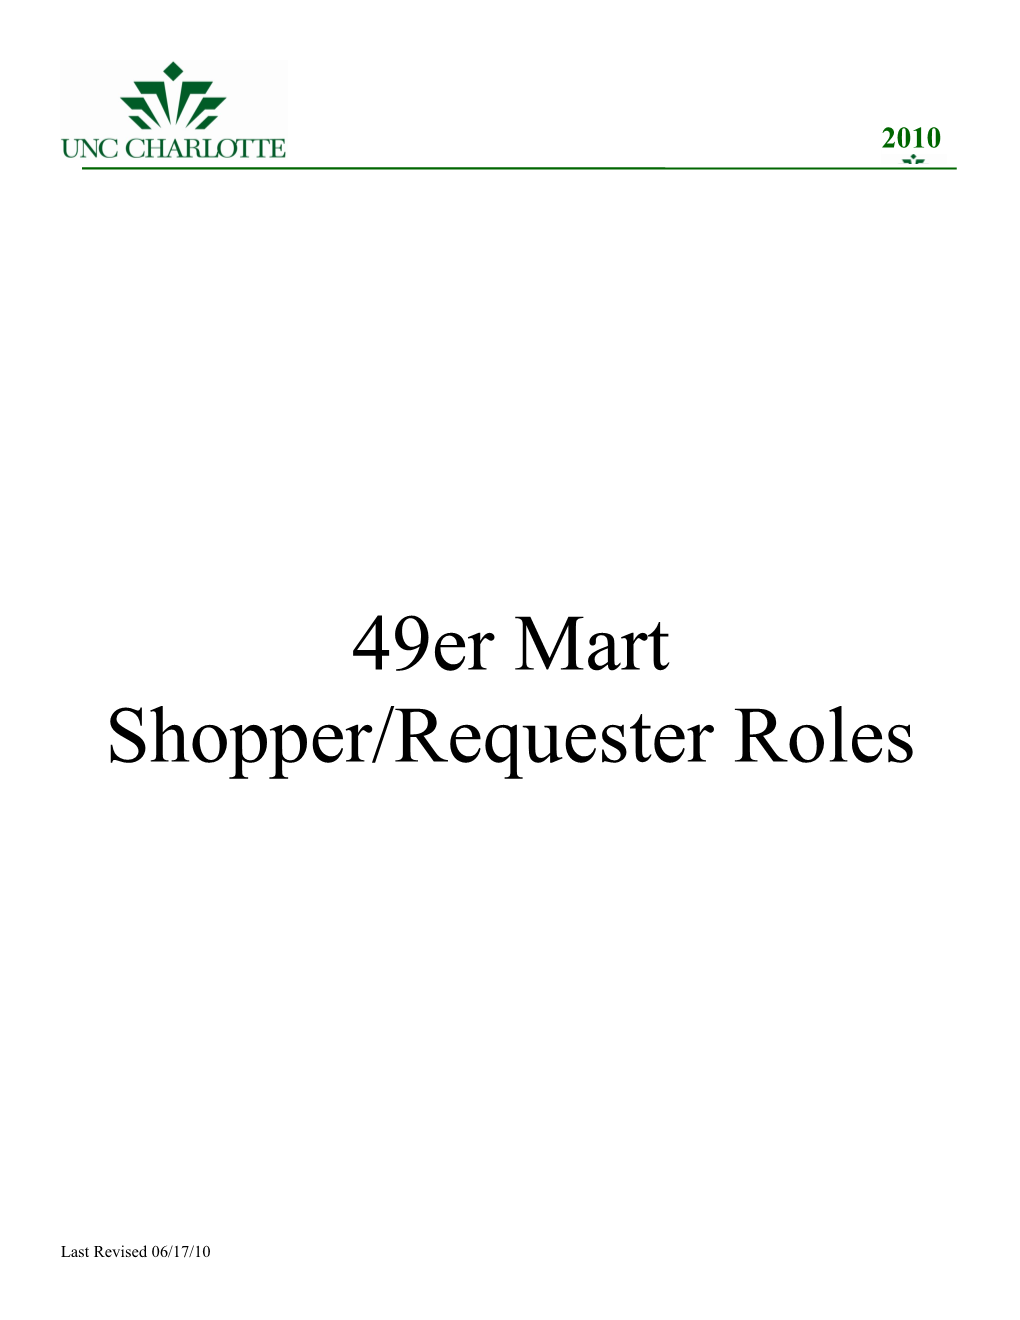 Shopper/Requester Roles